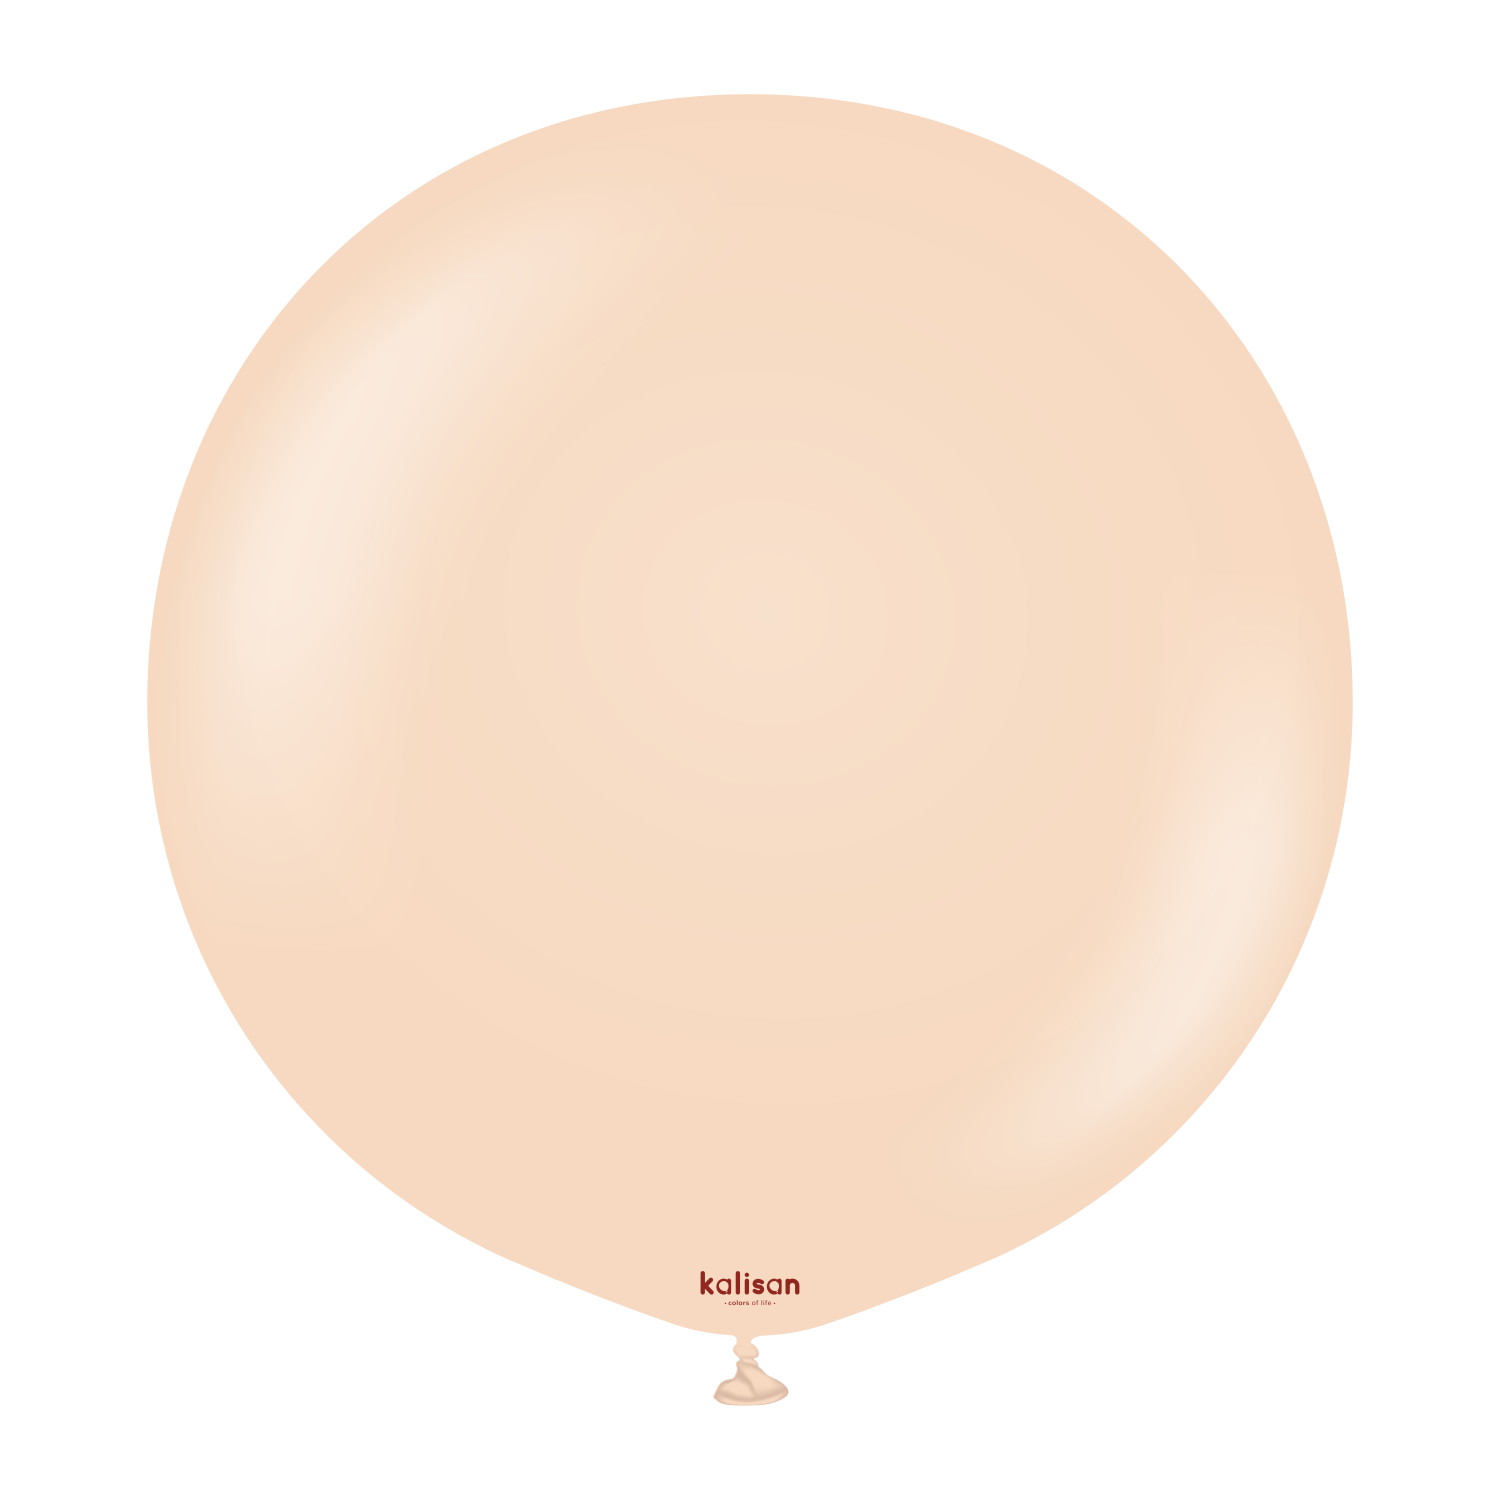 Premium lateksballong Kalisan i beige farge 